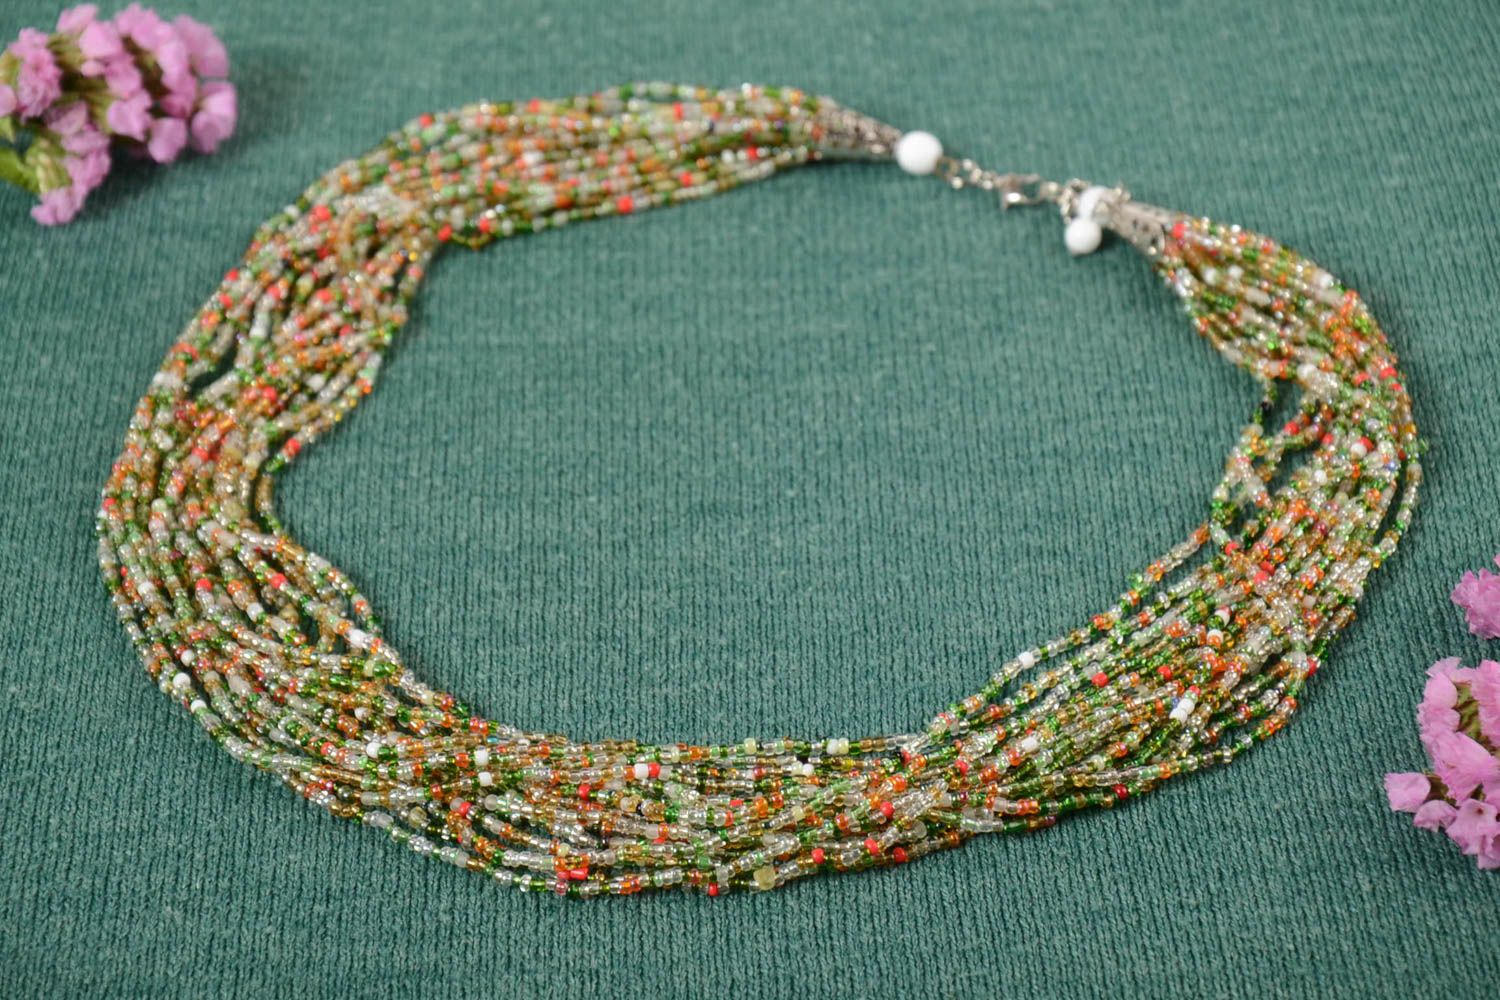 Stylish handmade beaded necklace beautiful necklace designs womens jewelry ideas photo 1